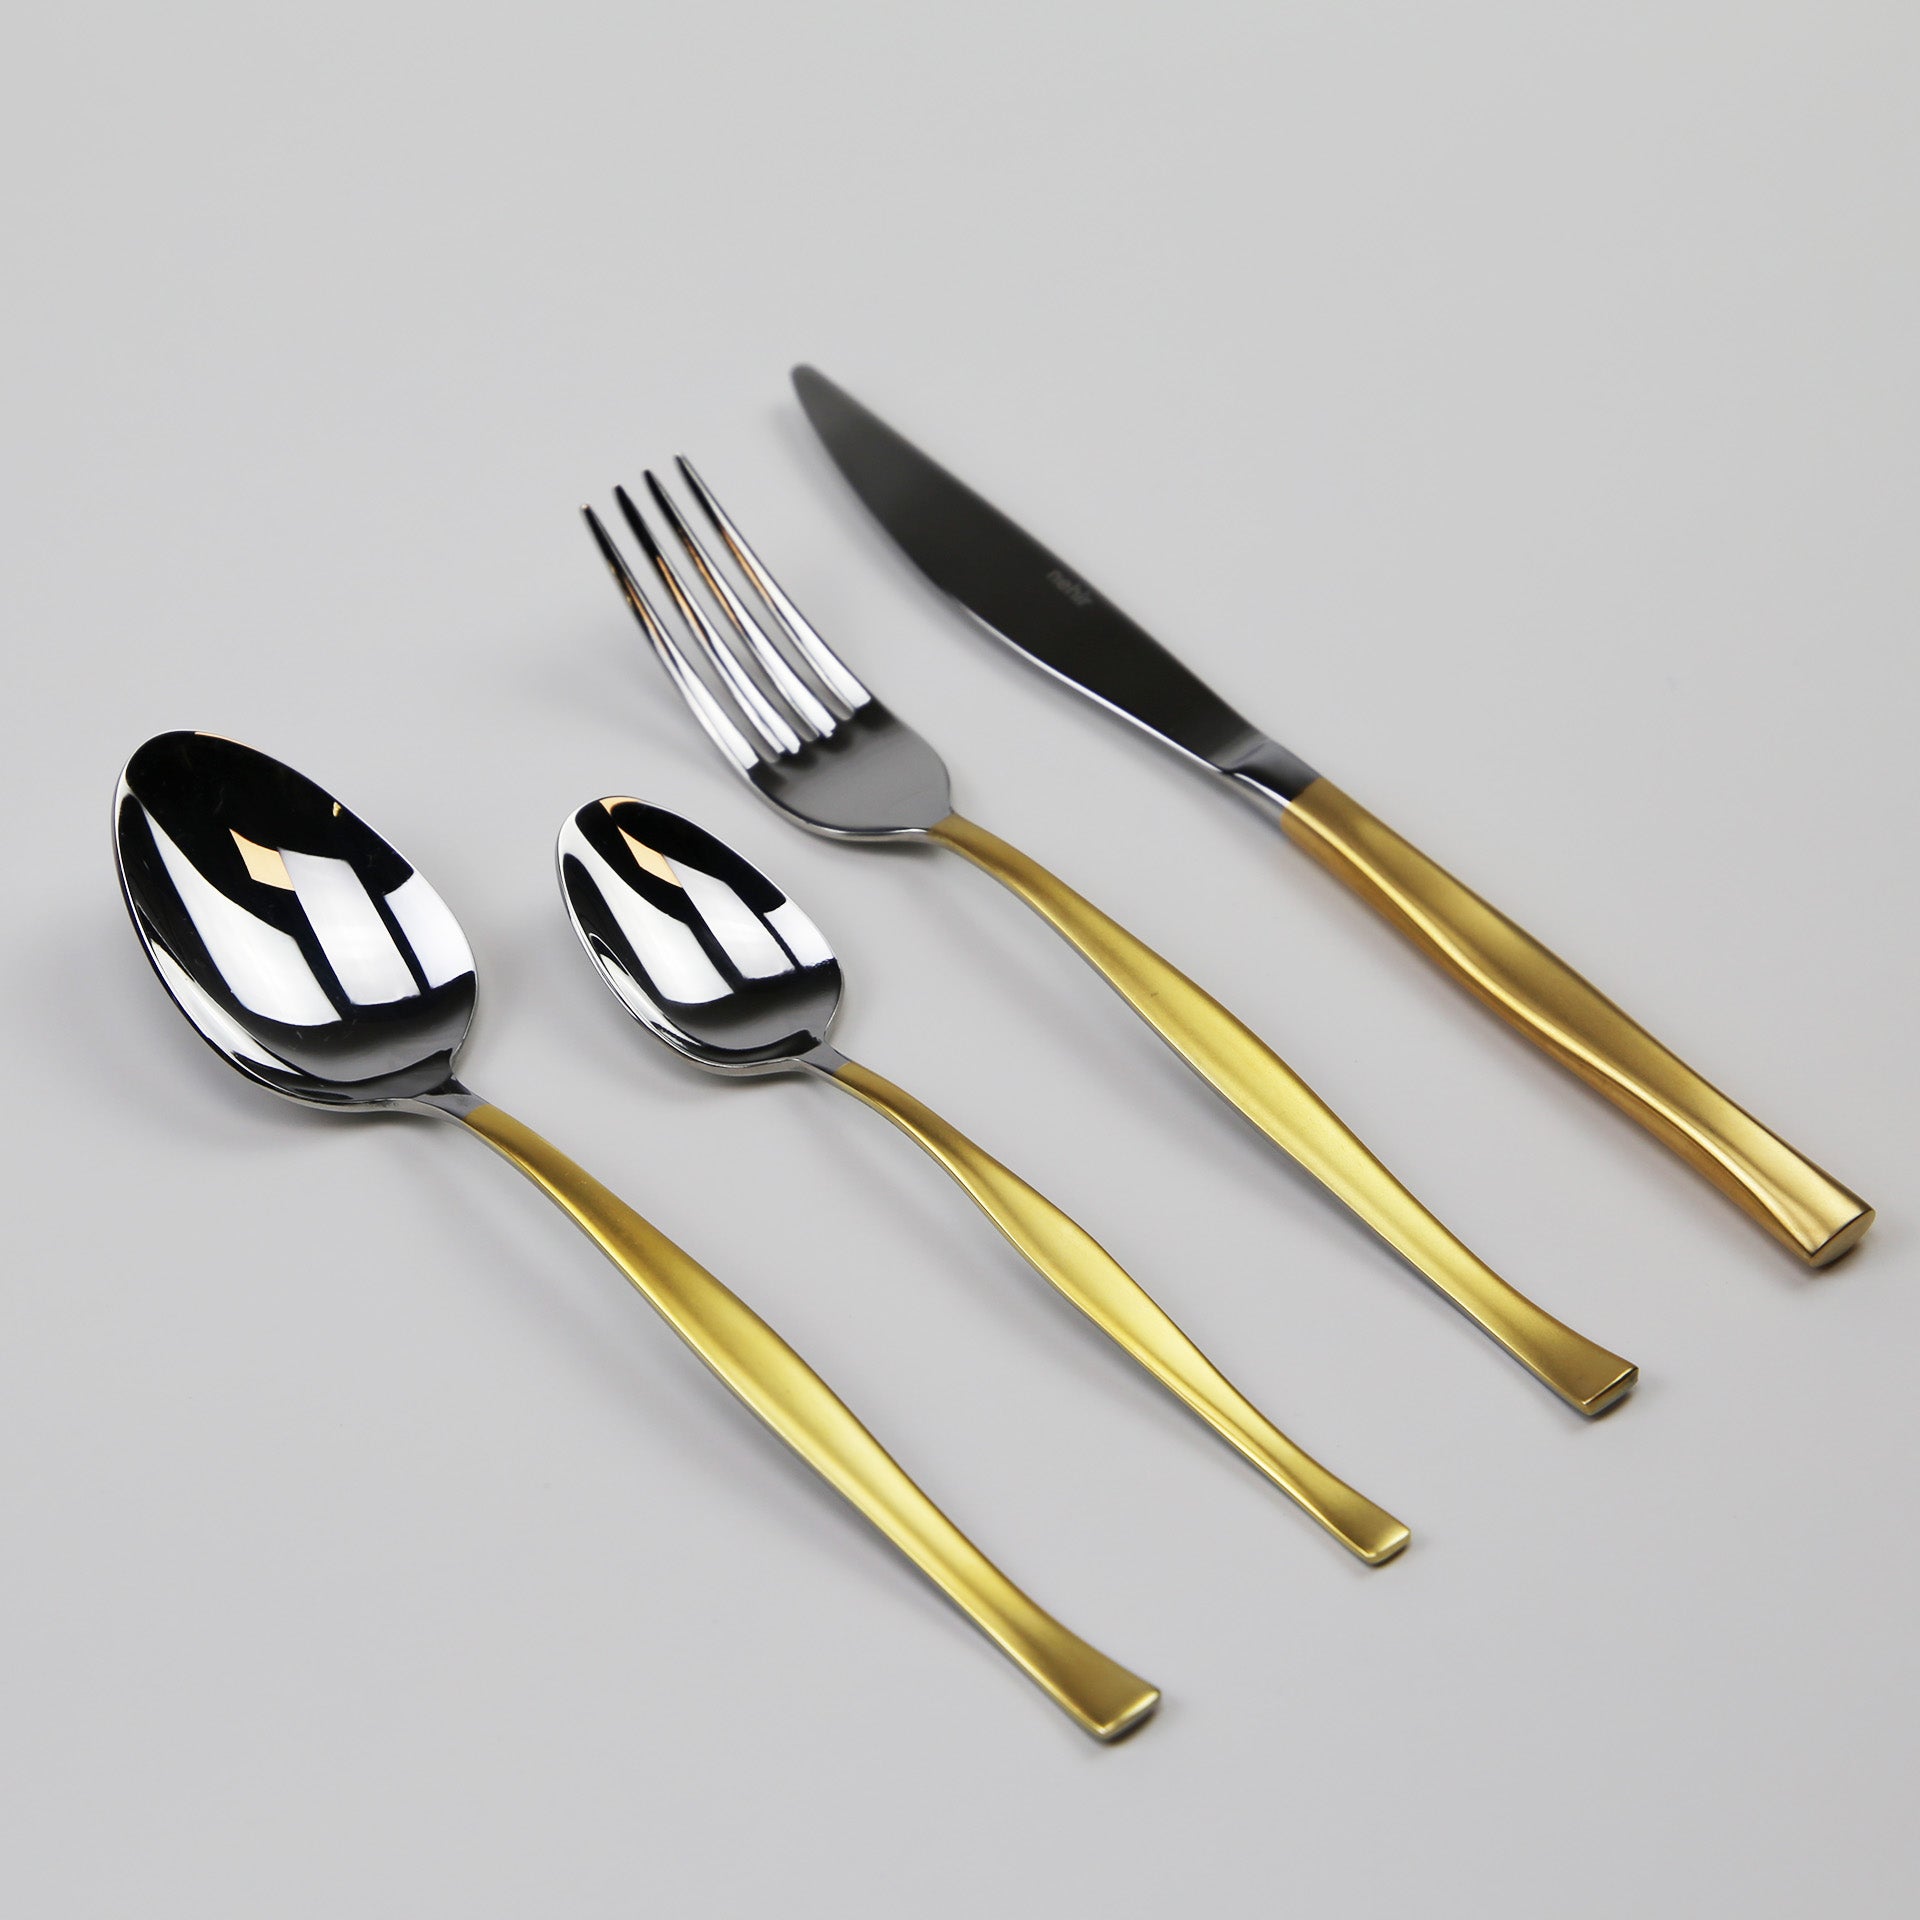 Zarif 24 Pcs Set with Dessert Spoon - Gold